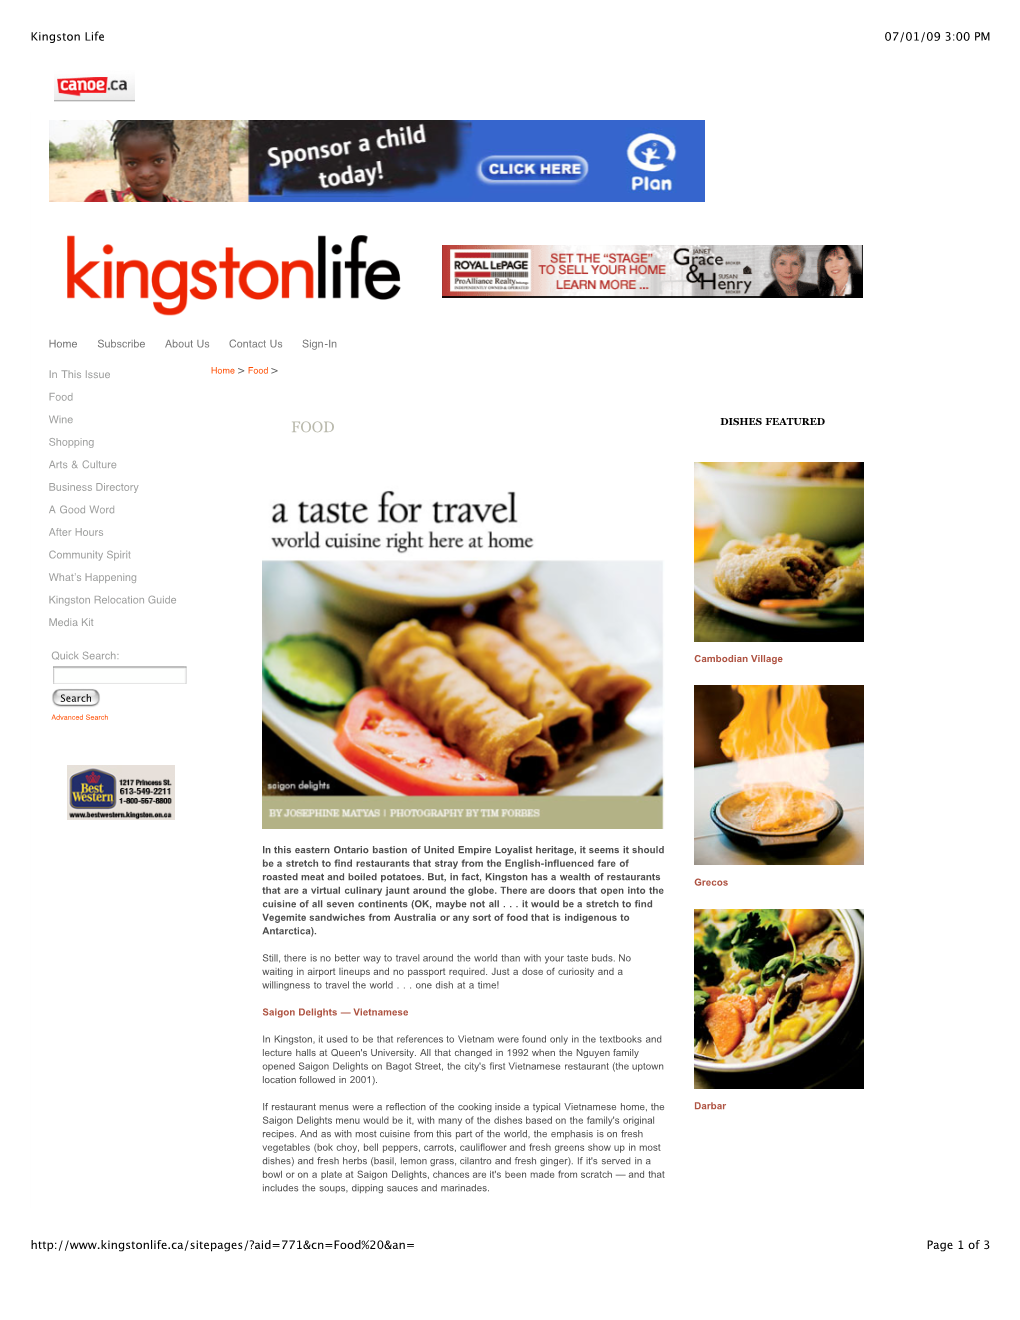 Kingston Life January 2009